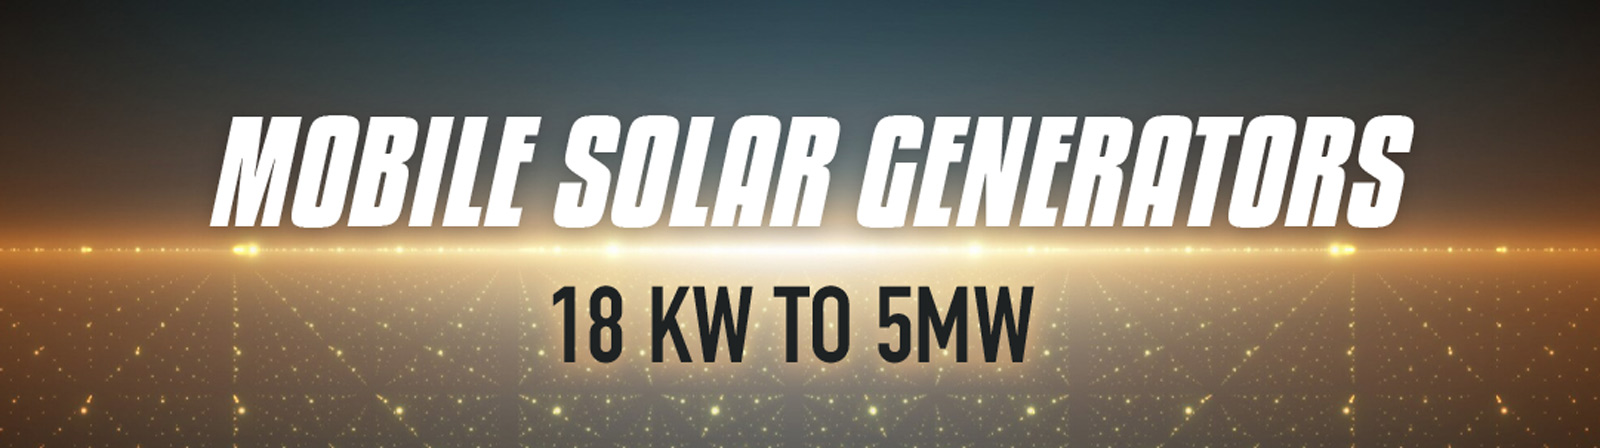 B'Safe Energy - MOBILE SOLAR GENERATORS 18 KW TO 5MW